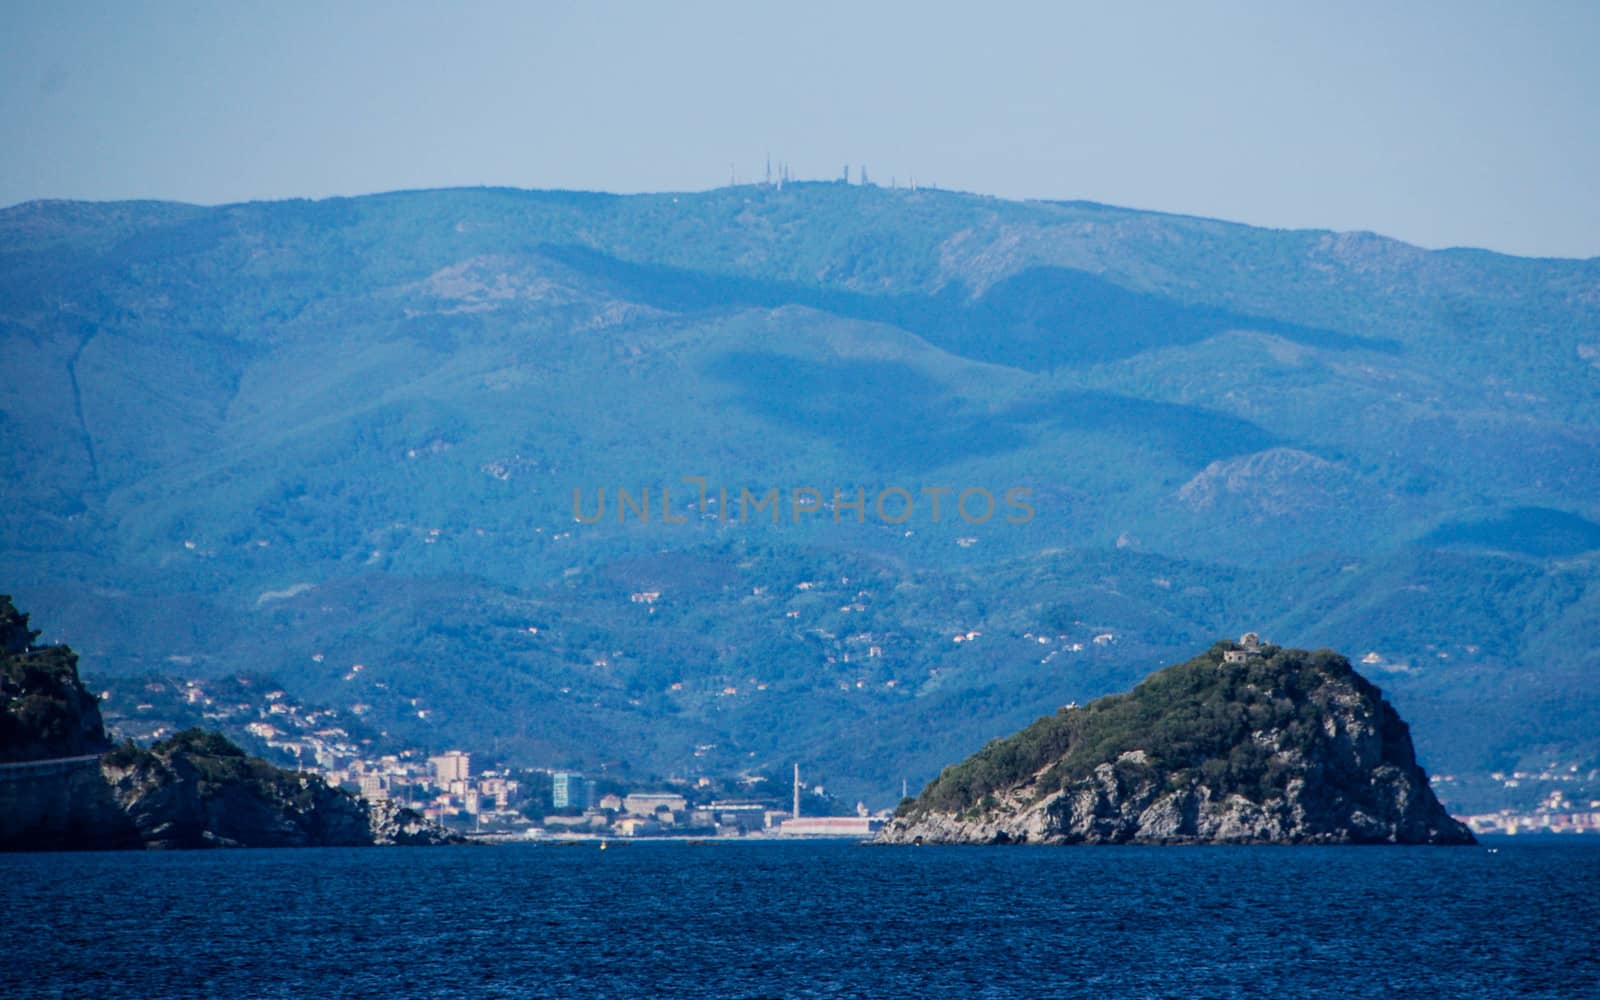 Bergeggi Island, Liguria - Italy by cosca